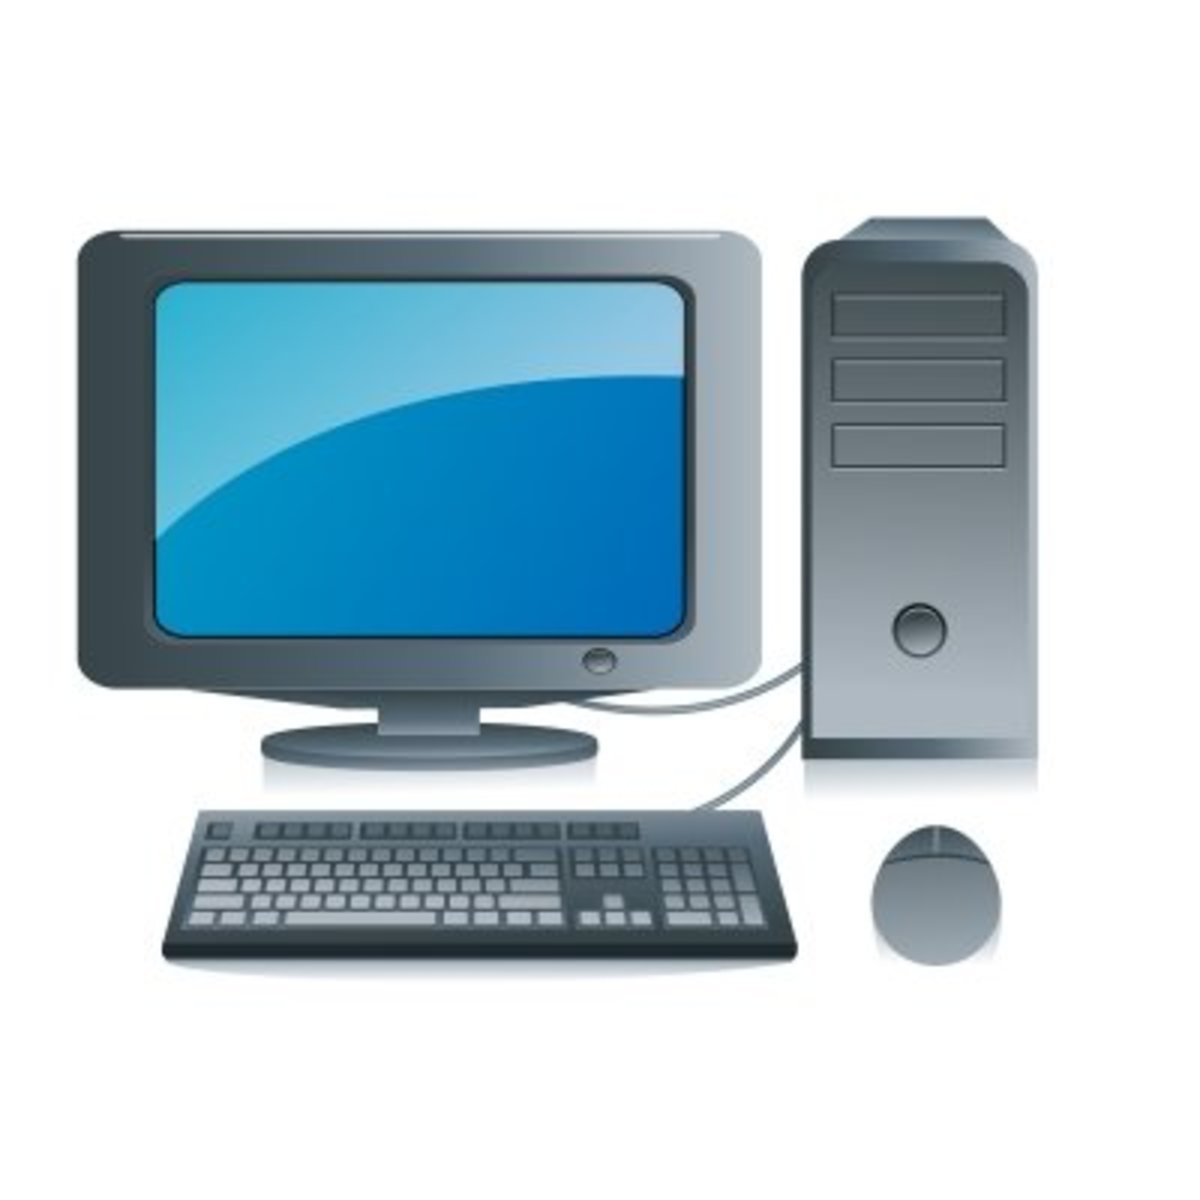 A desktop Computer